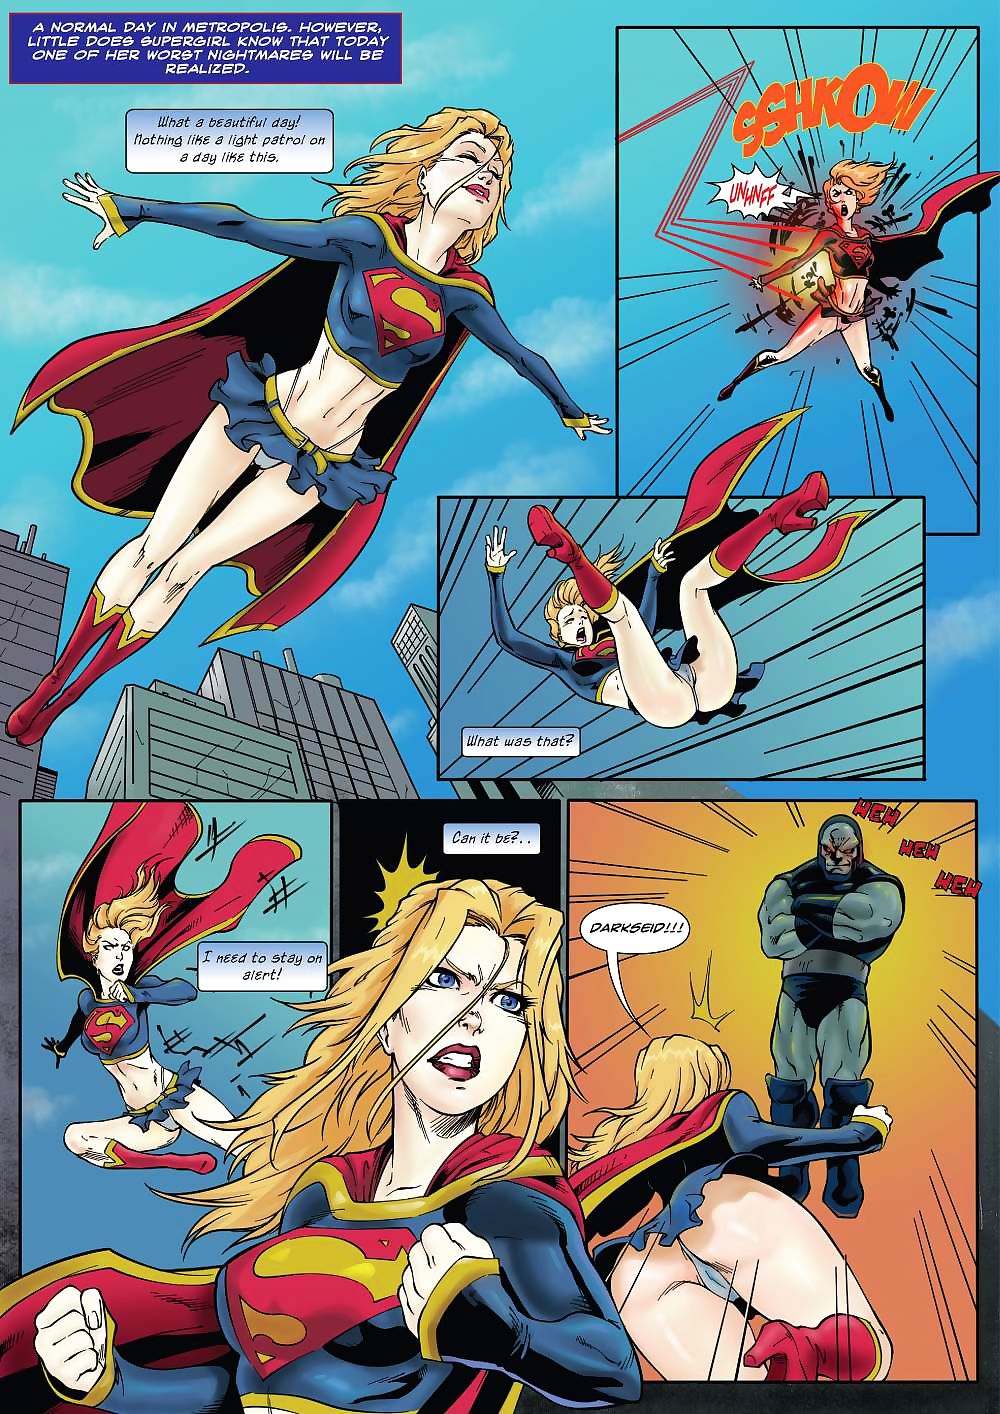 supergirl’s vorig staan